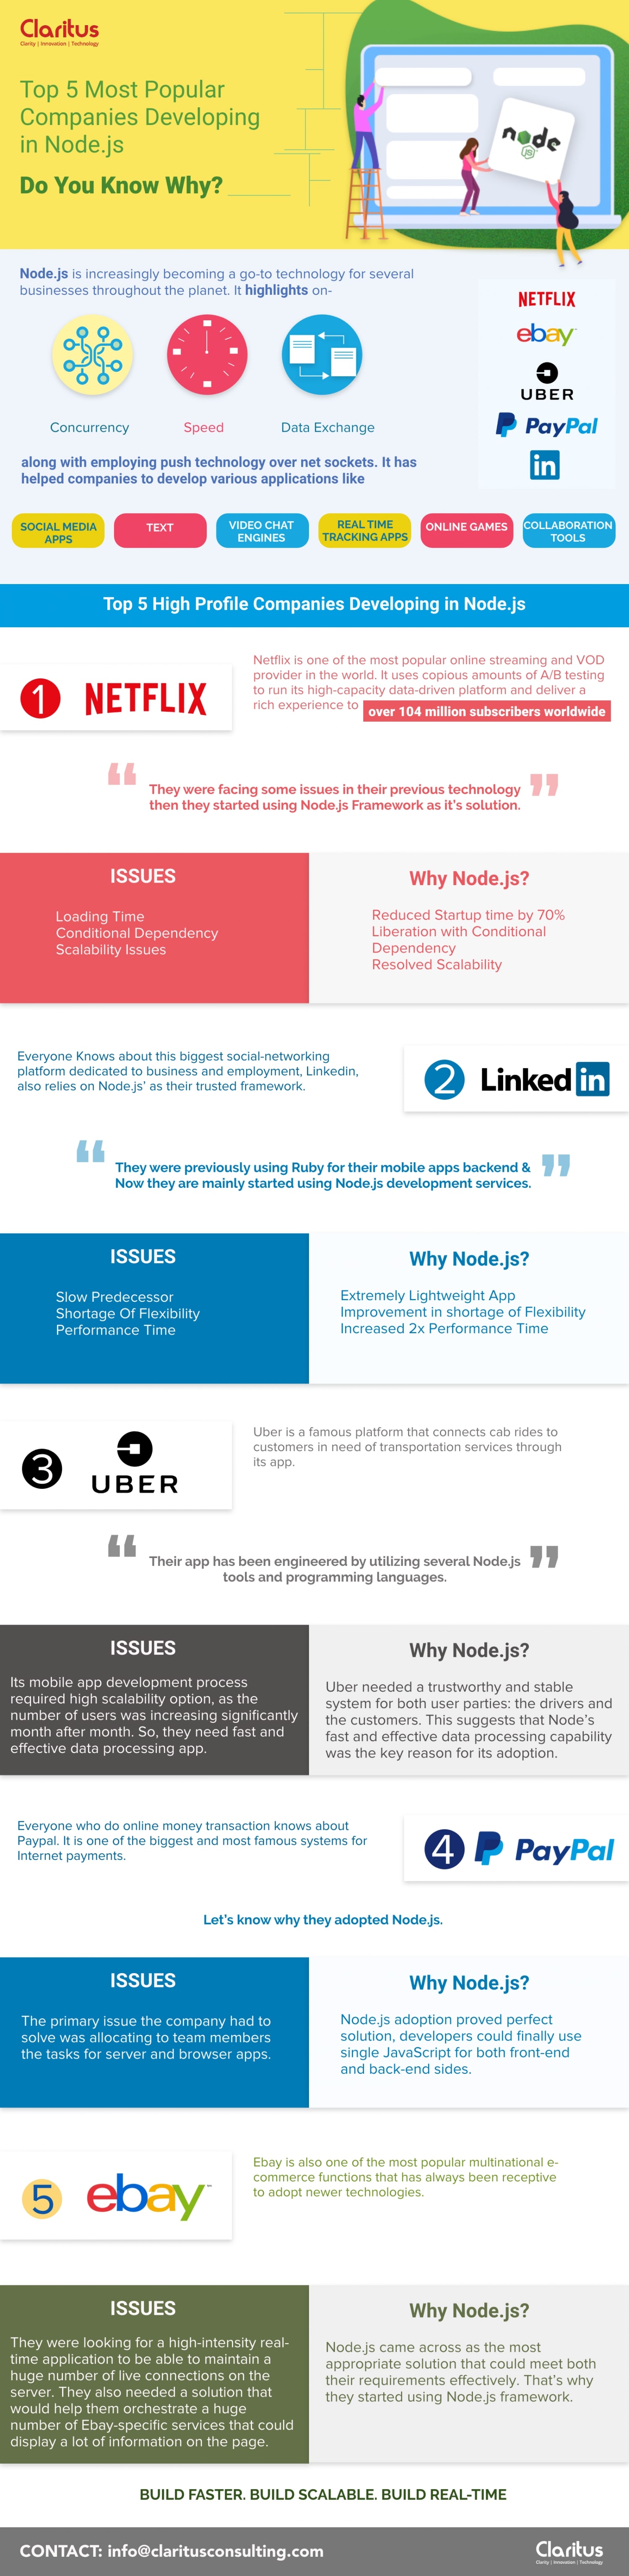 Top 5 Most Popular Companies Developing in NodeJS